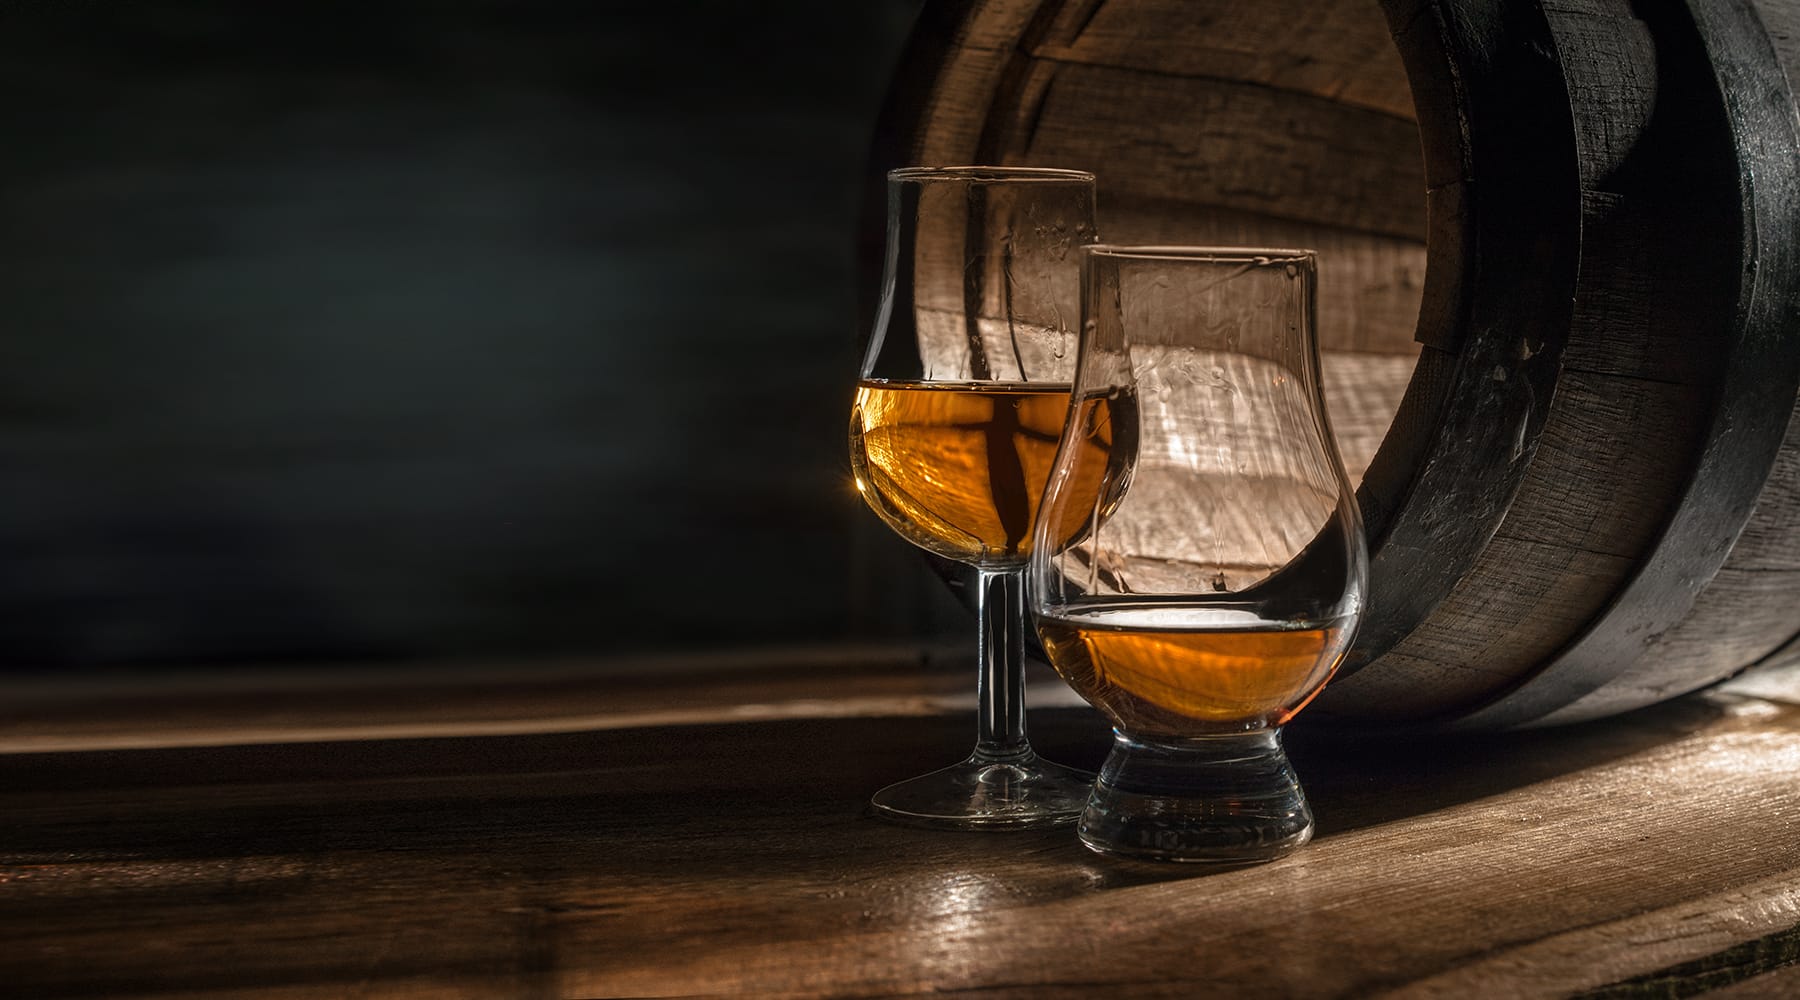 Chapter 7: Craft Whisky and Single Malt Scotch